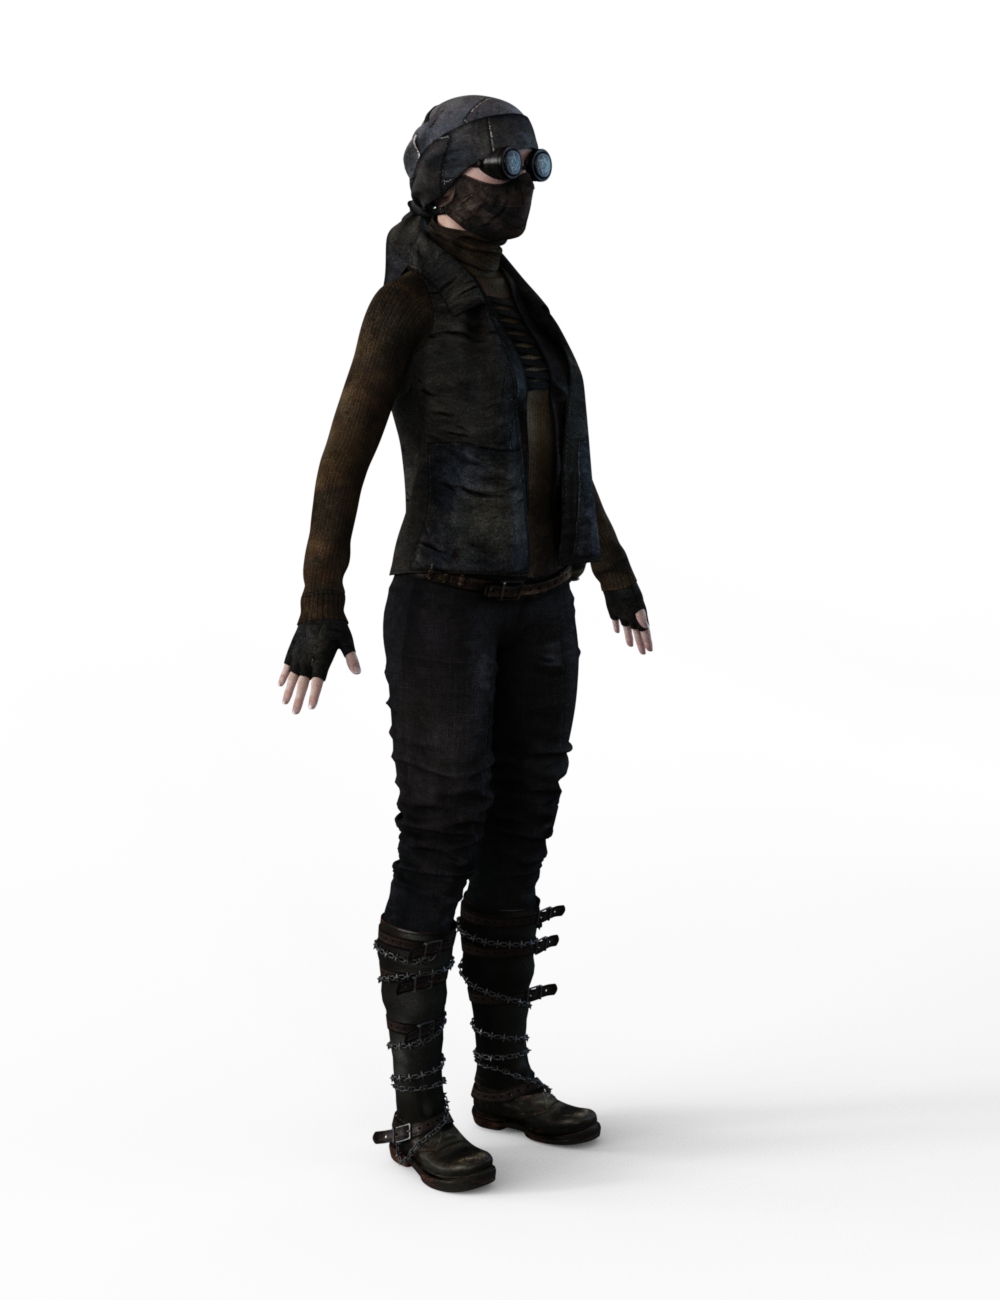 FBX- Base Female Rough Rider by: Paleo, 3D Models by Daz 3D